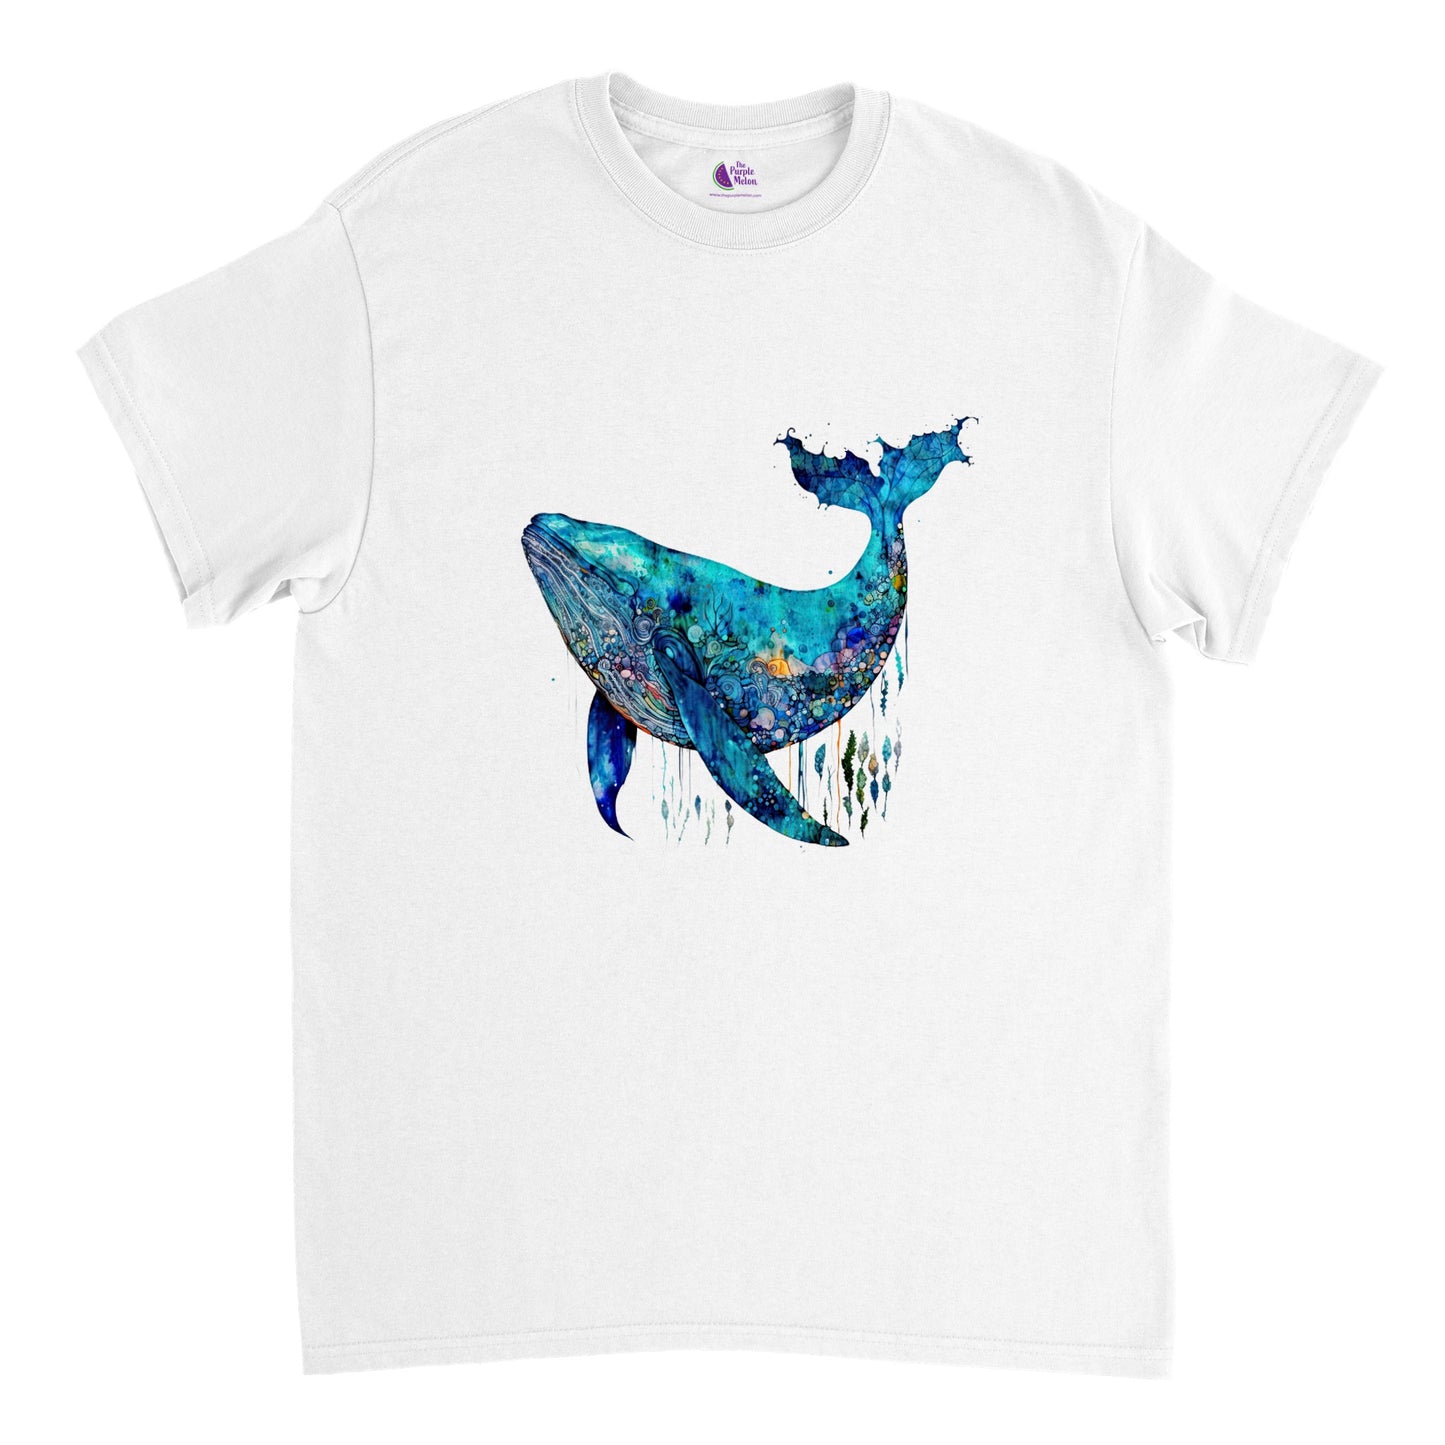 White t-shirt with a blue whale print